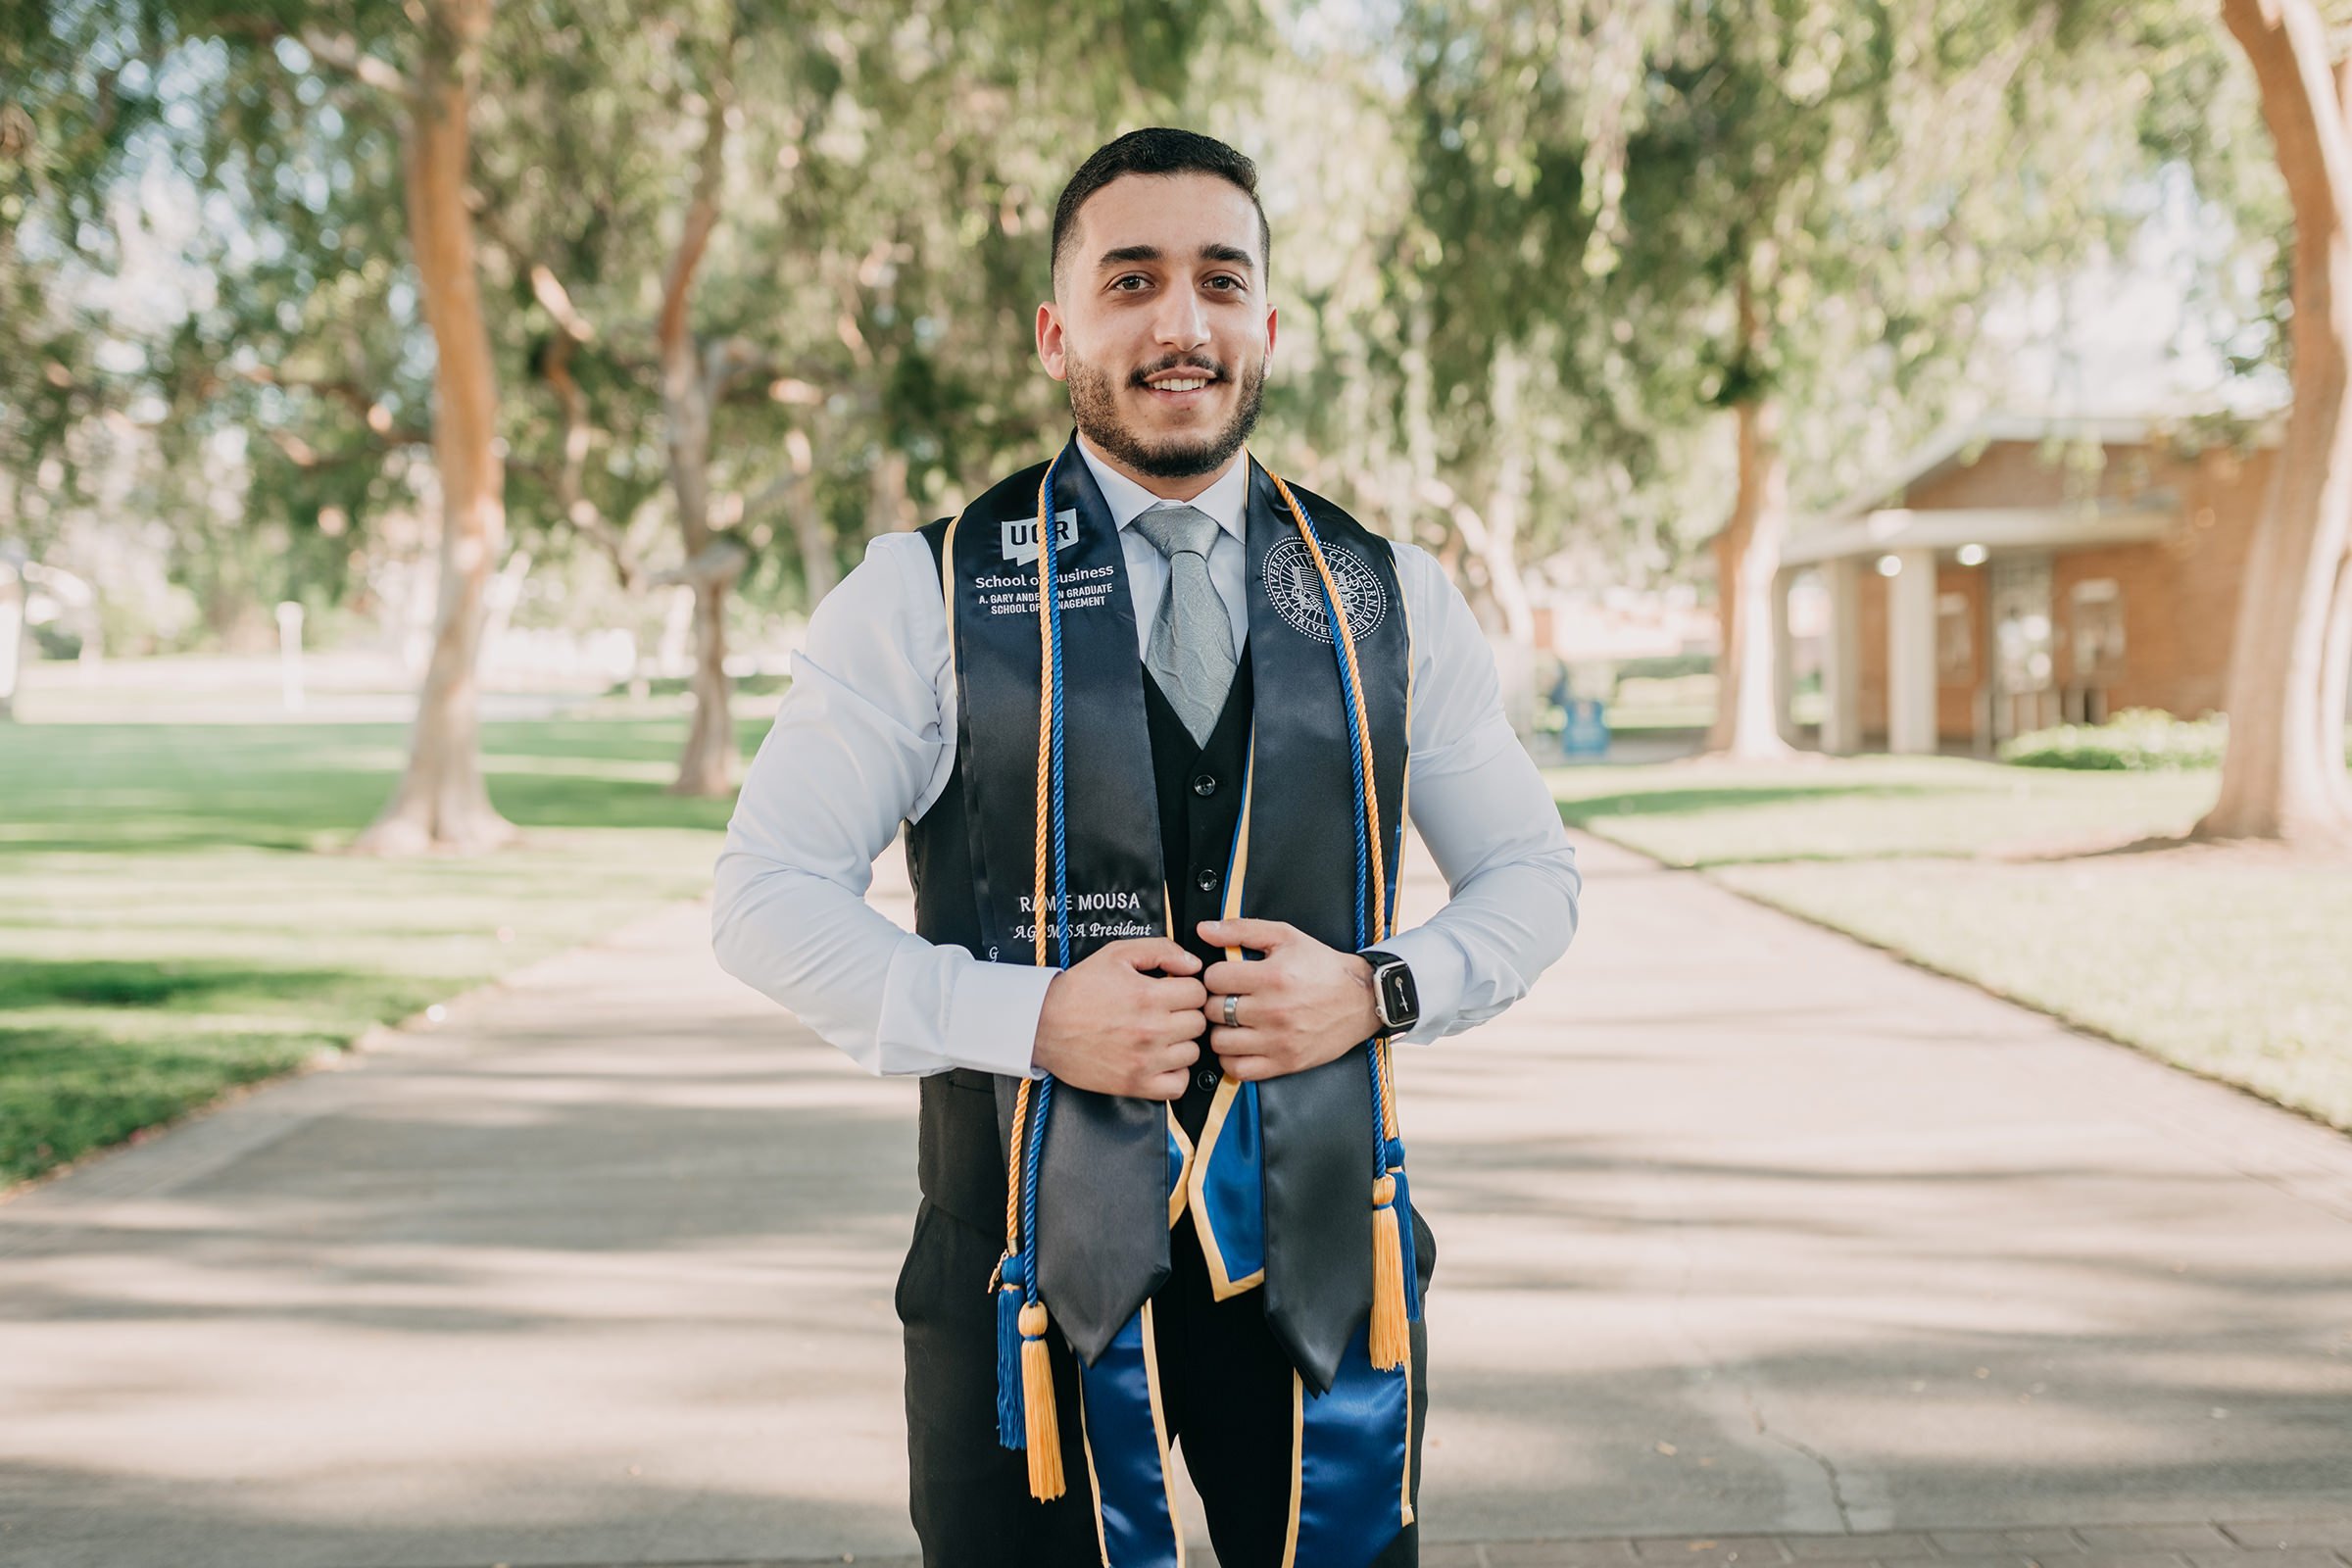 ucr-graduation-male-portrait-riverside-california-photographer-6.jpg